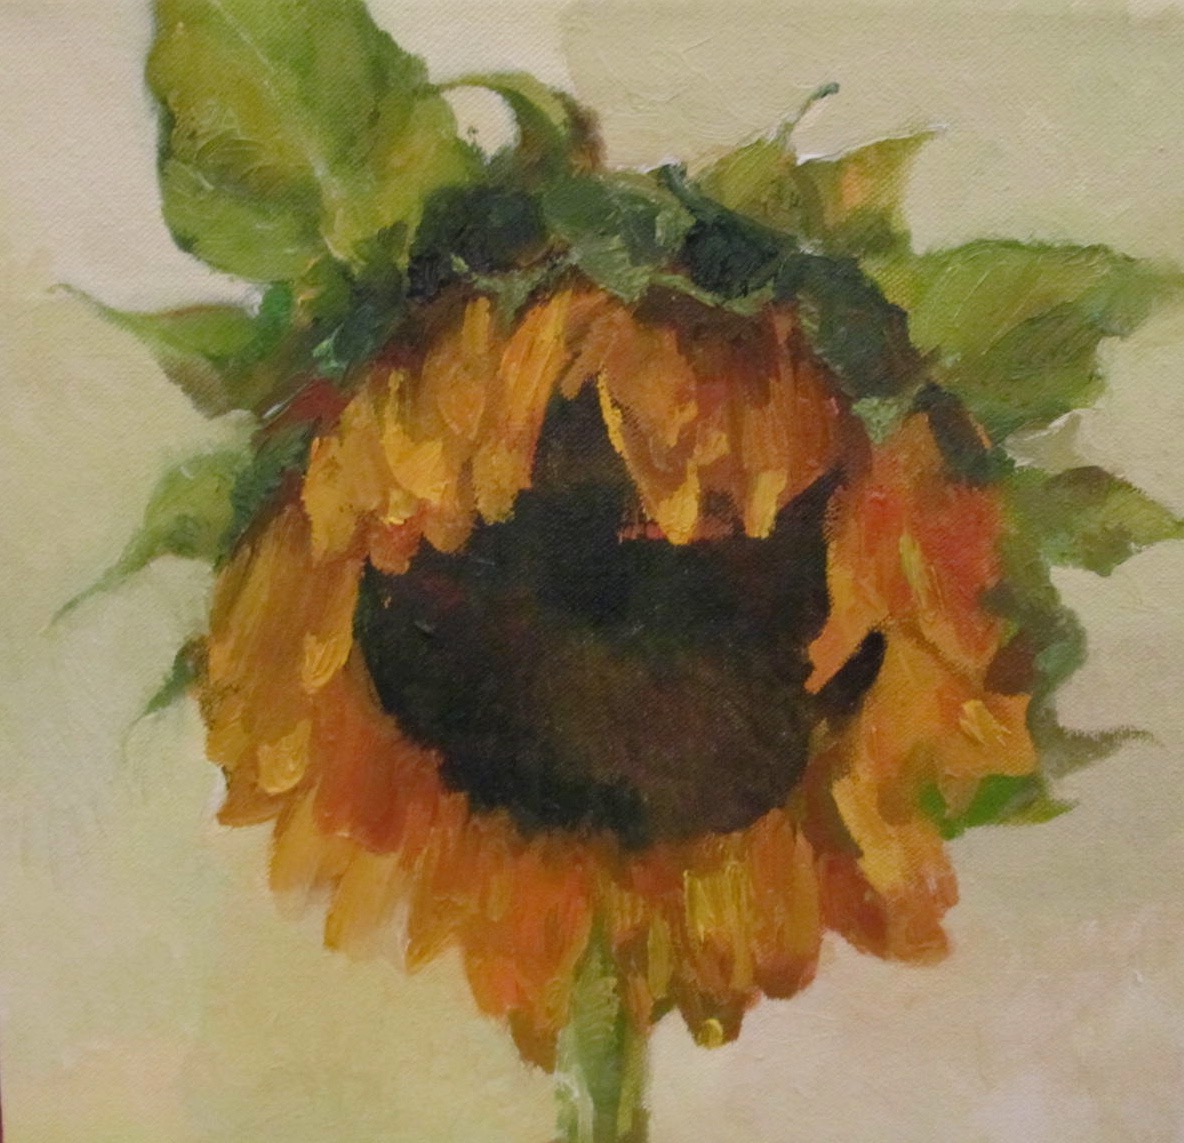  004 'Sunflower' Oil on Canvas